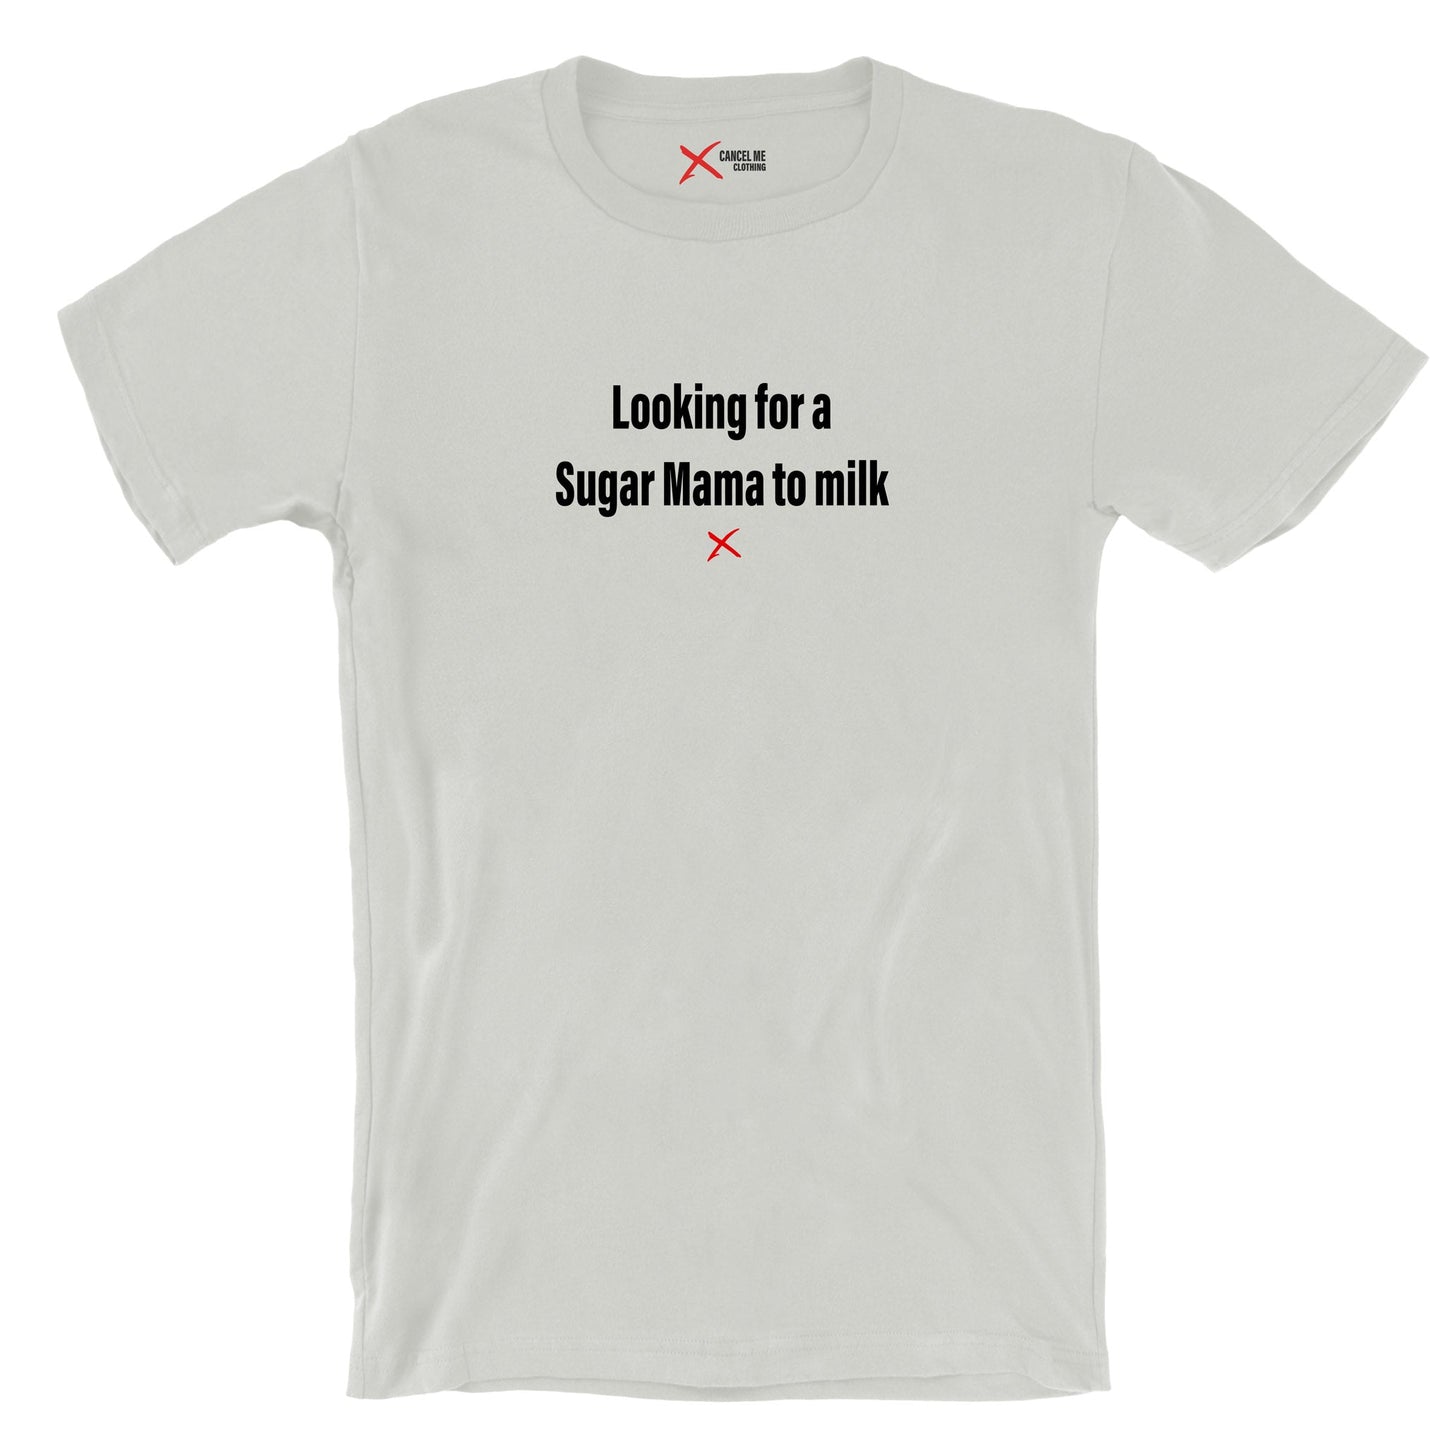 Looking for a Sugar Mama to milk - Shirt